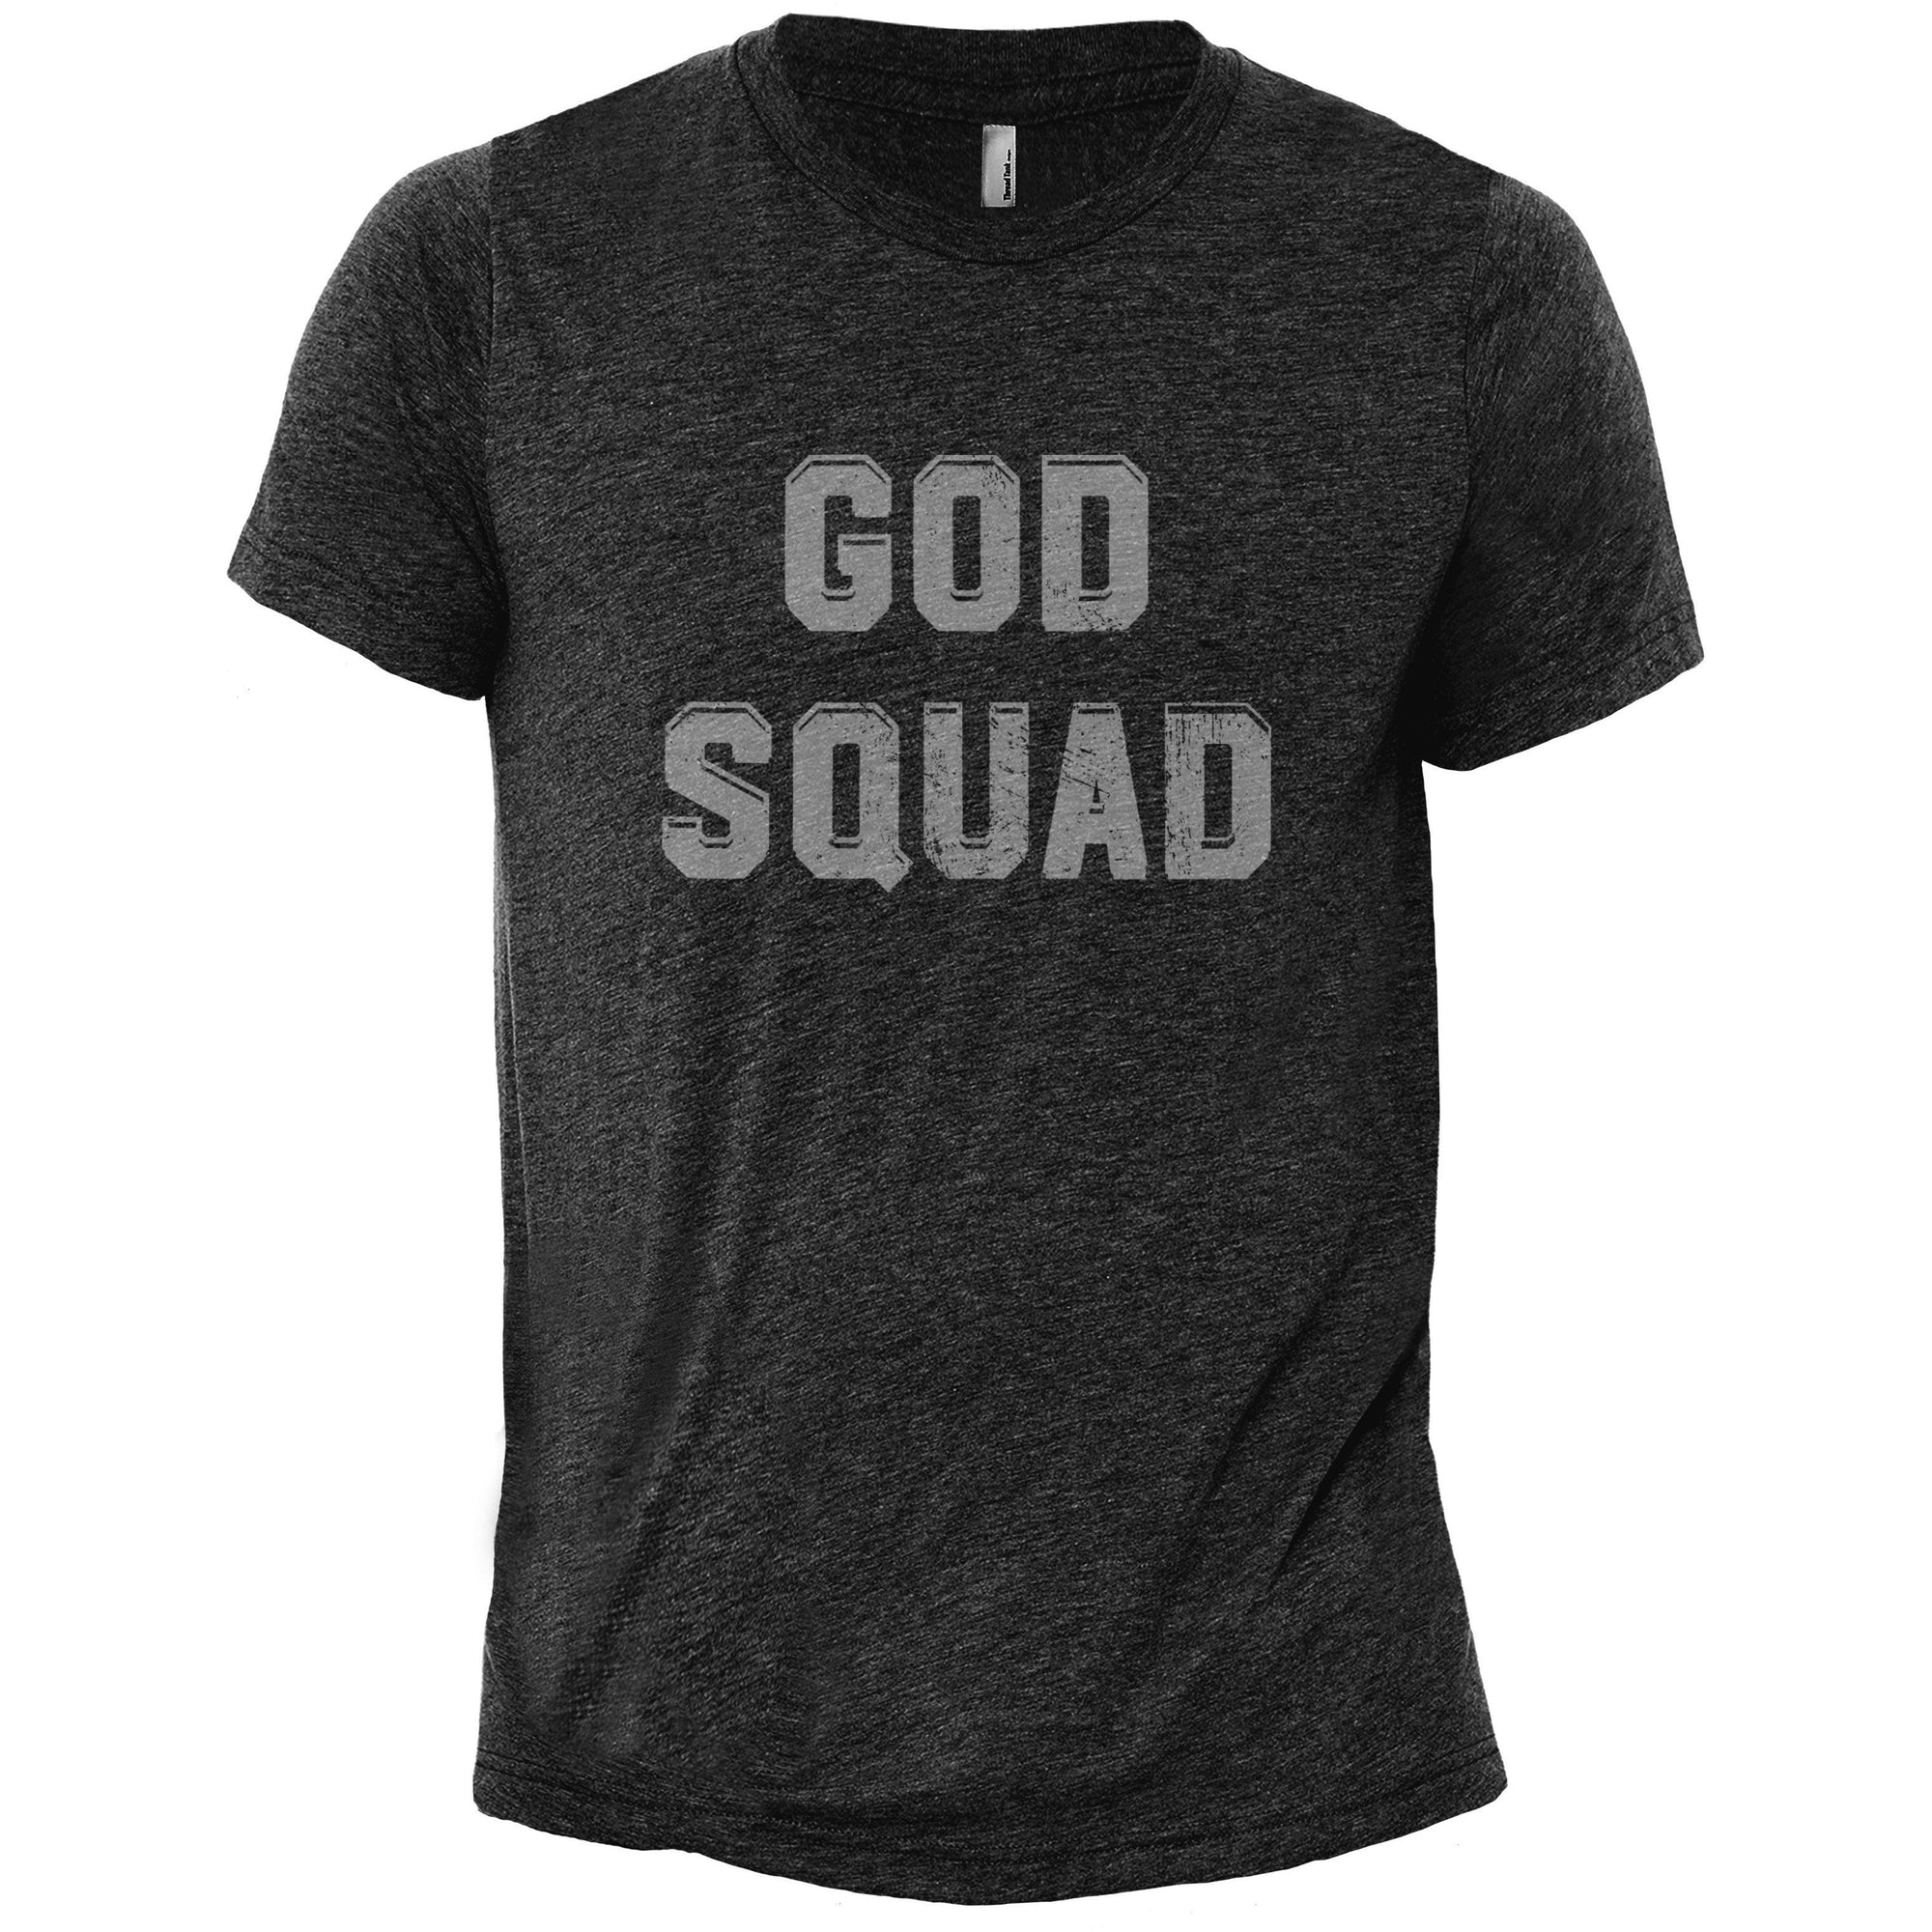 God Squad Heather Grey Printed Graphic Men's Crew T-Shirt Tee